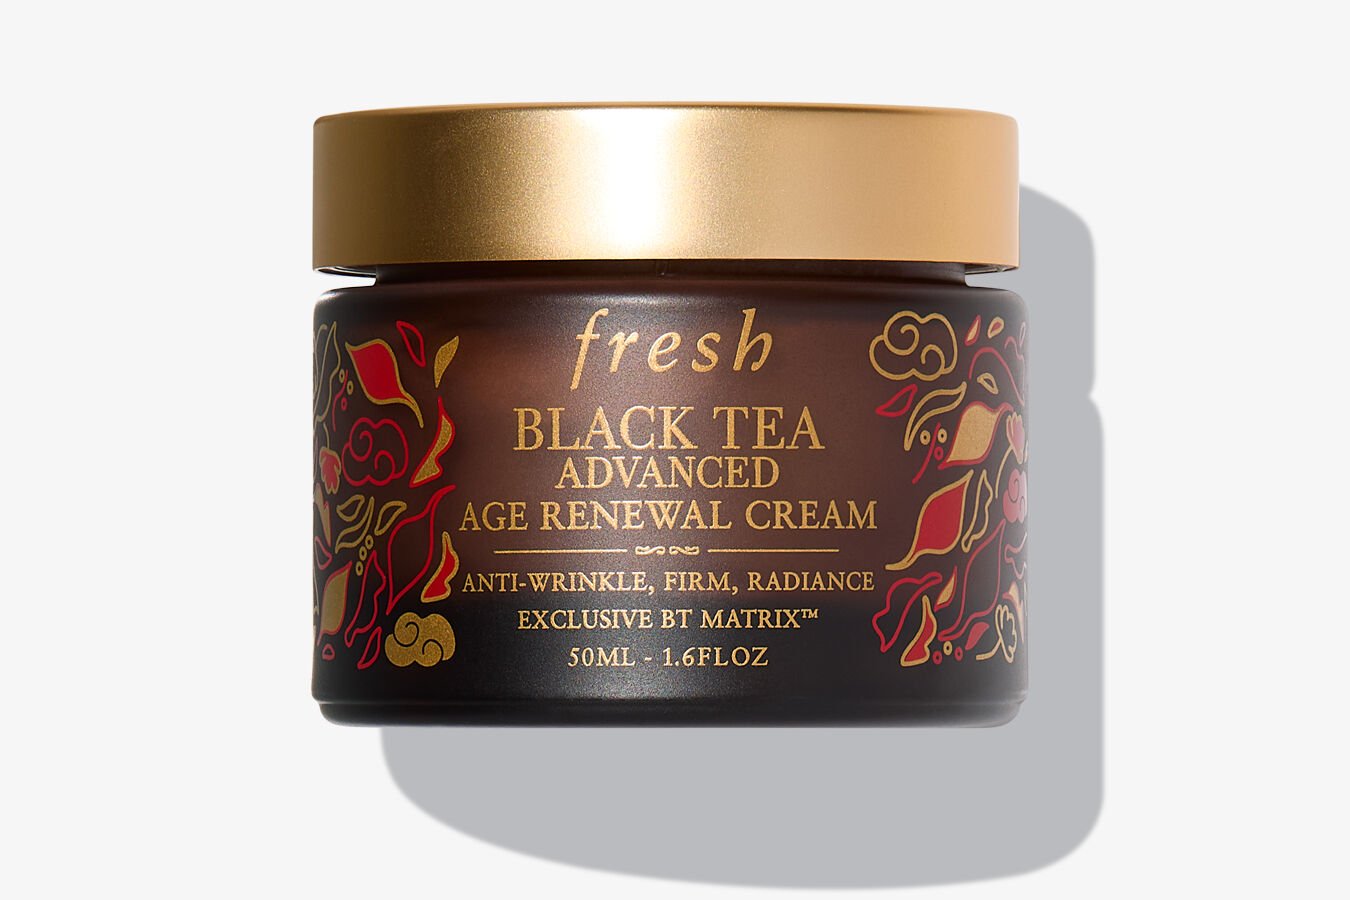 Limited-Edition Black Tea Anti-Aging Ceramide Moisturizer